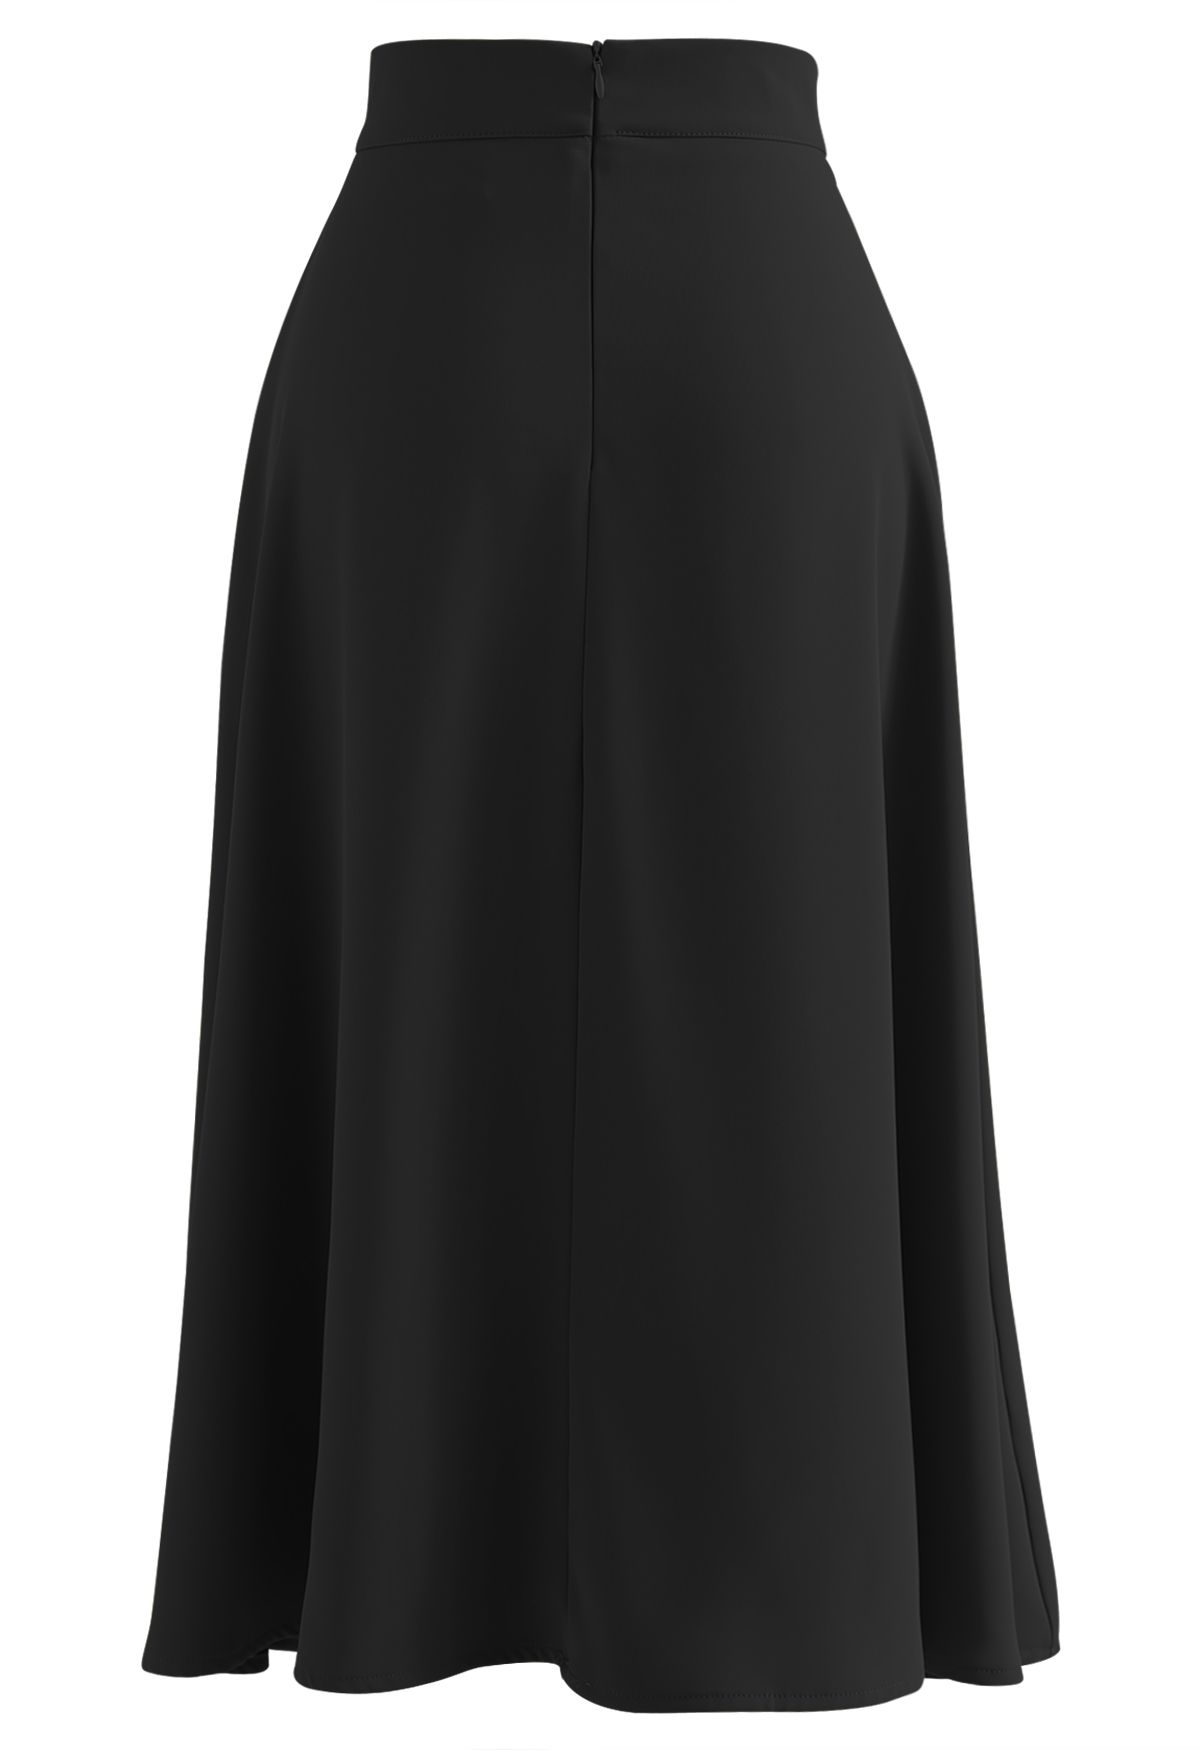 Classy Pearl Trim Flare Midi Skirt in Black - Retro, Indie and Unique ...